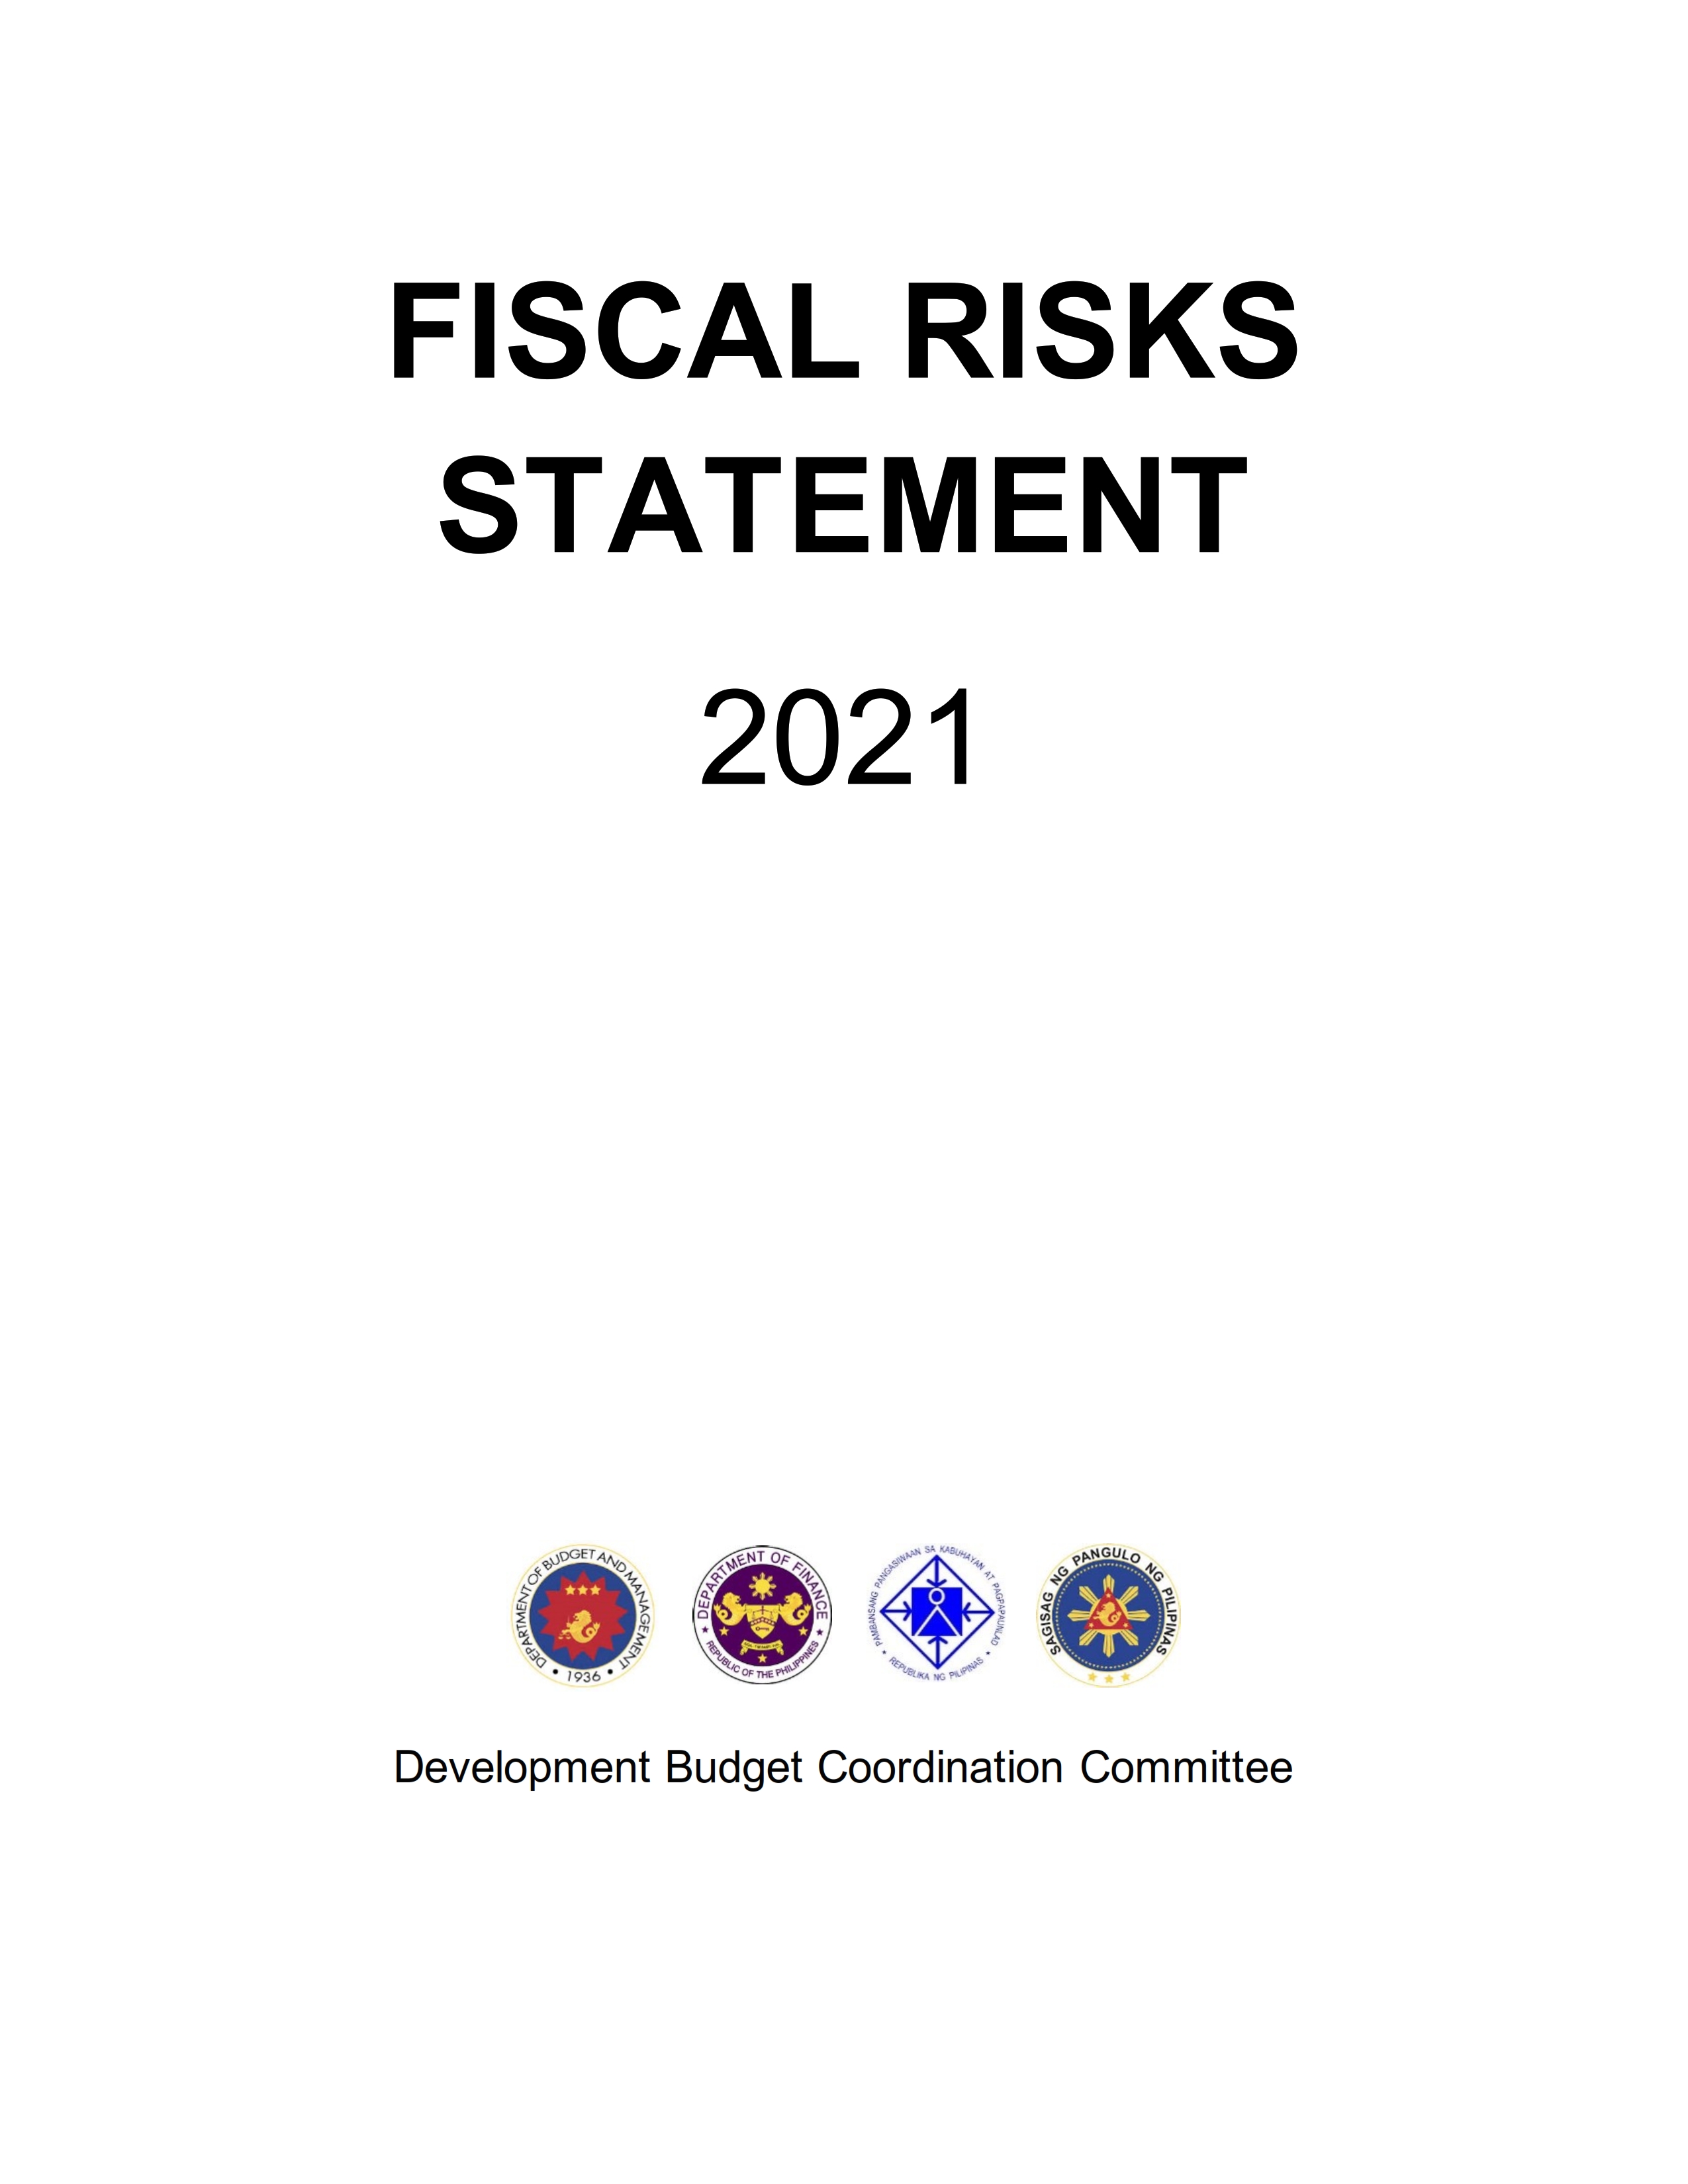 FISCAL RISKS STATEMENT 2021